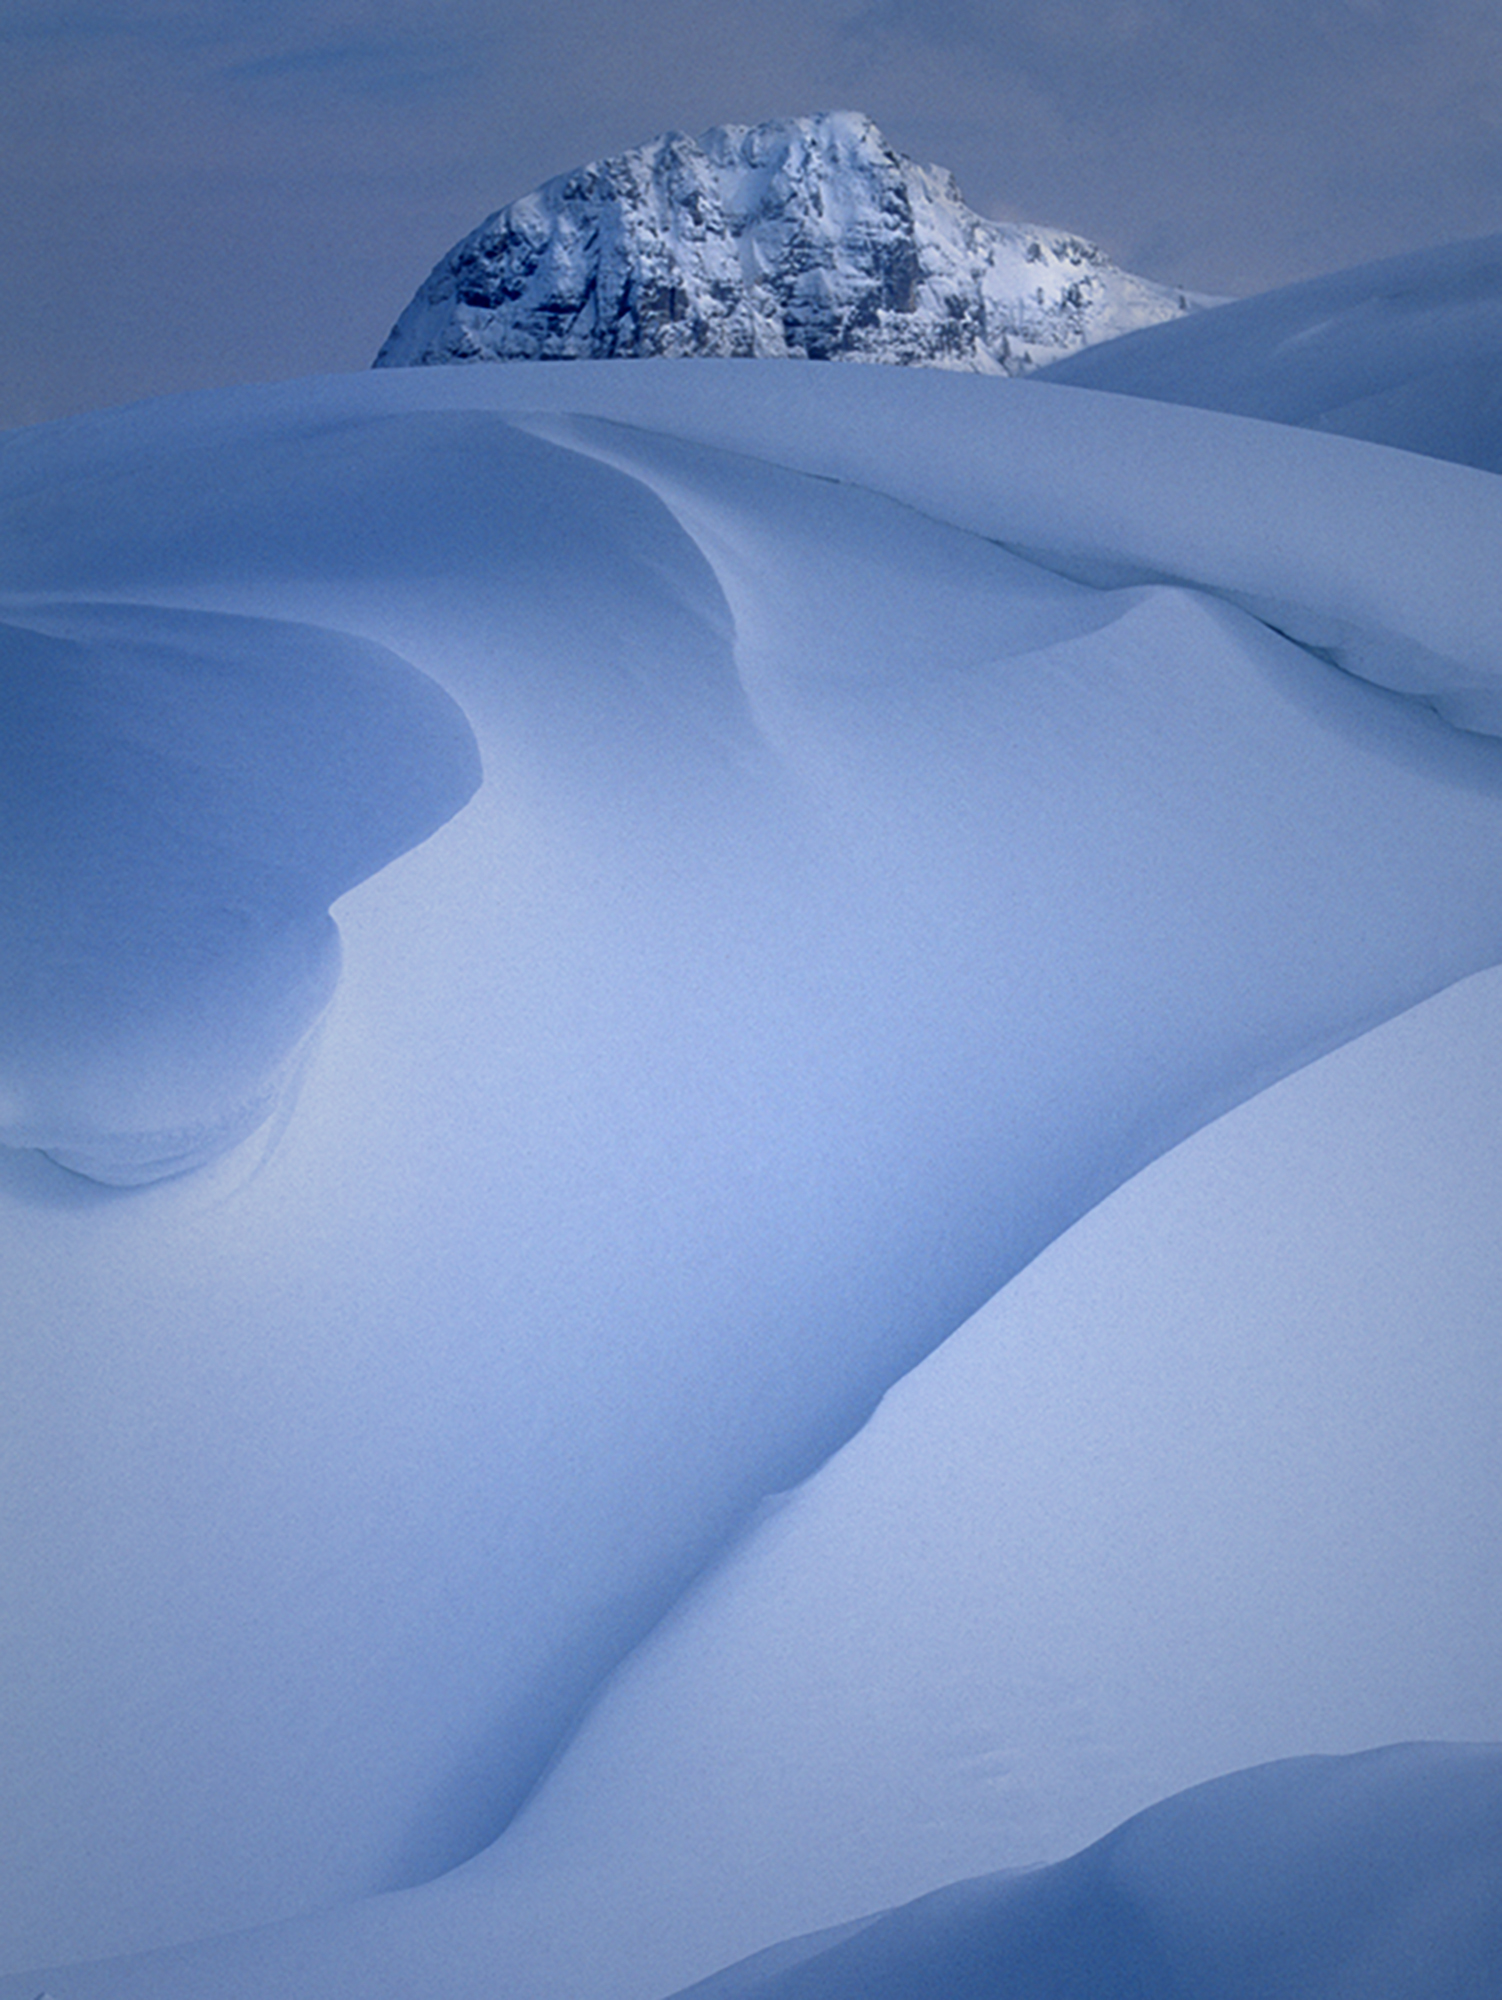 Snow dunes - Rif. Gilberti - Julian Alps 2004...